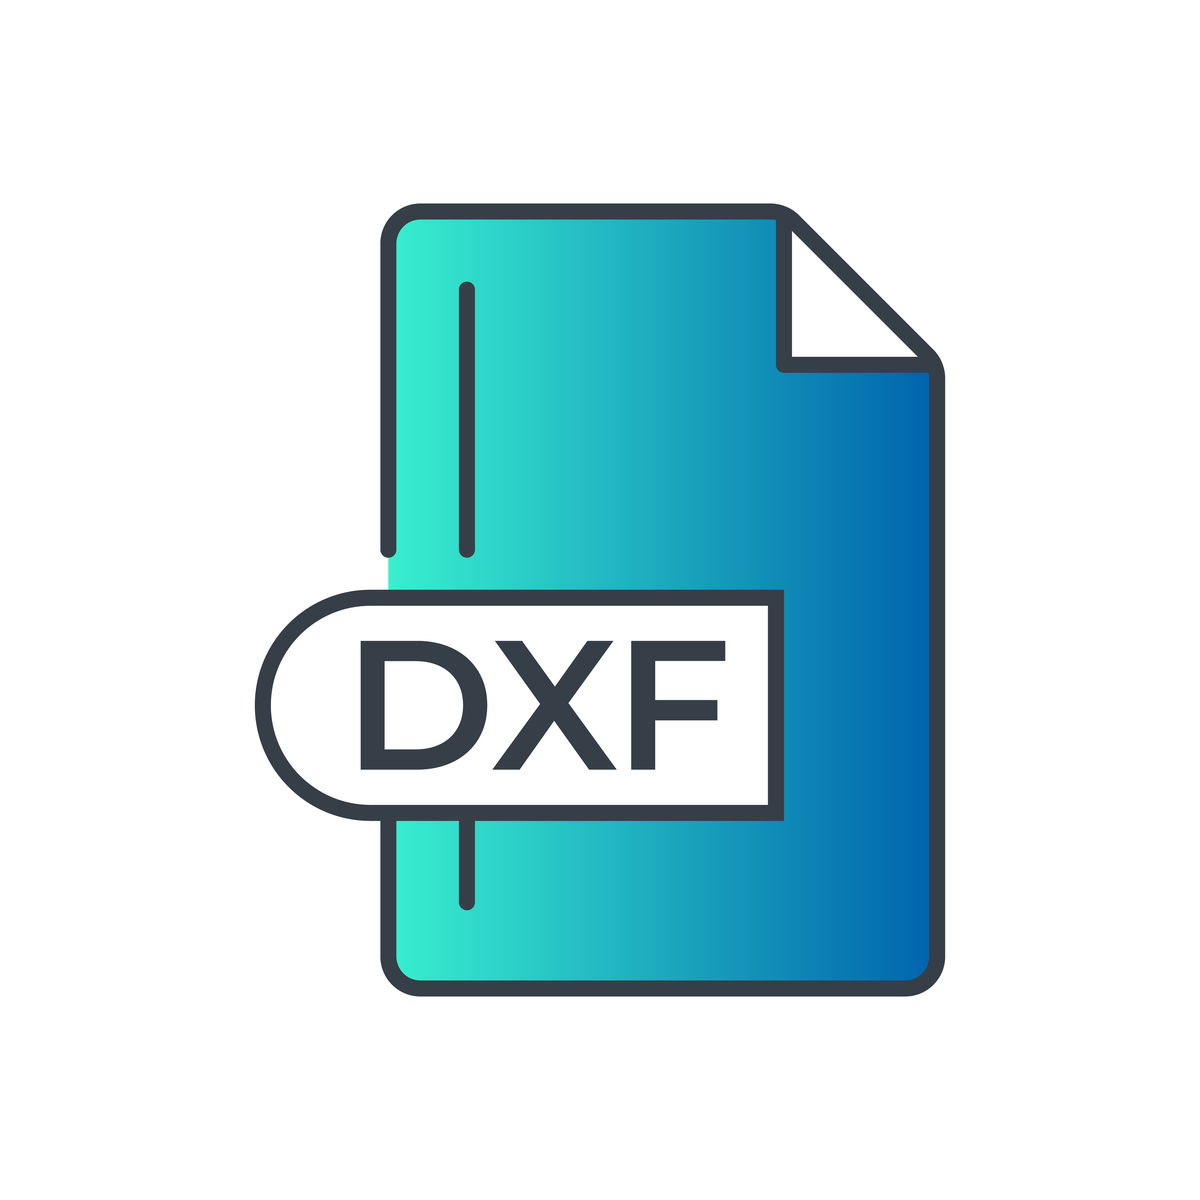 DXF File